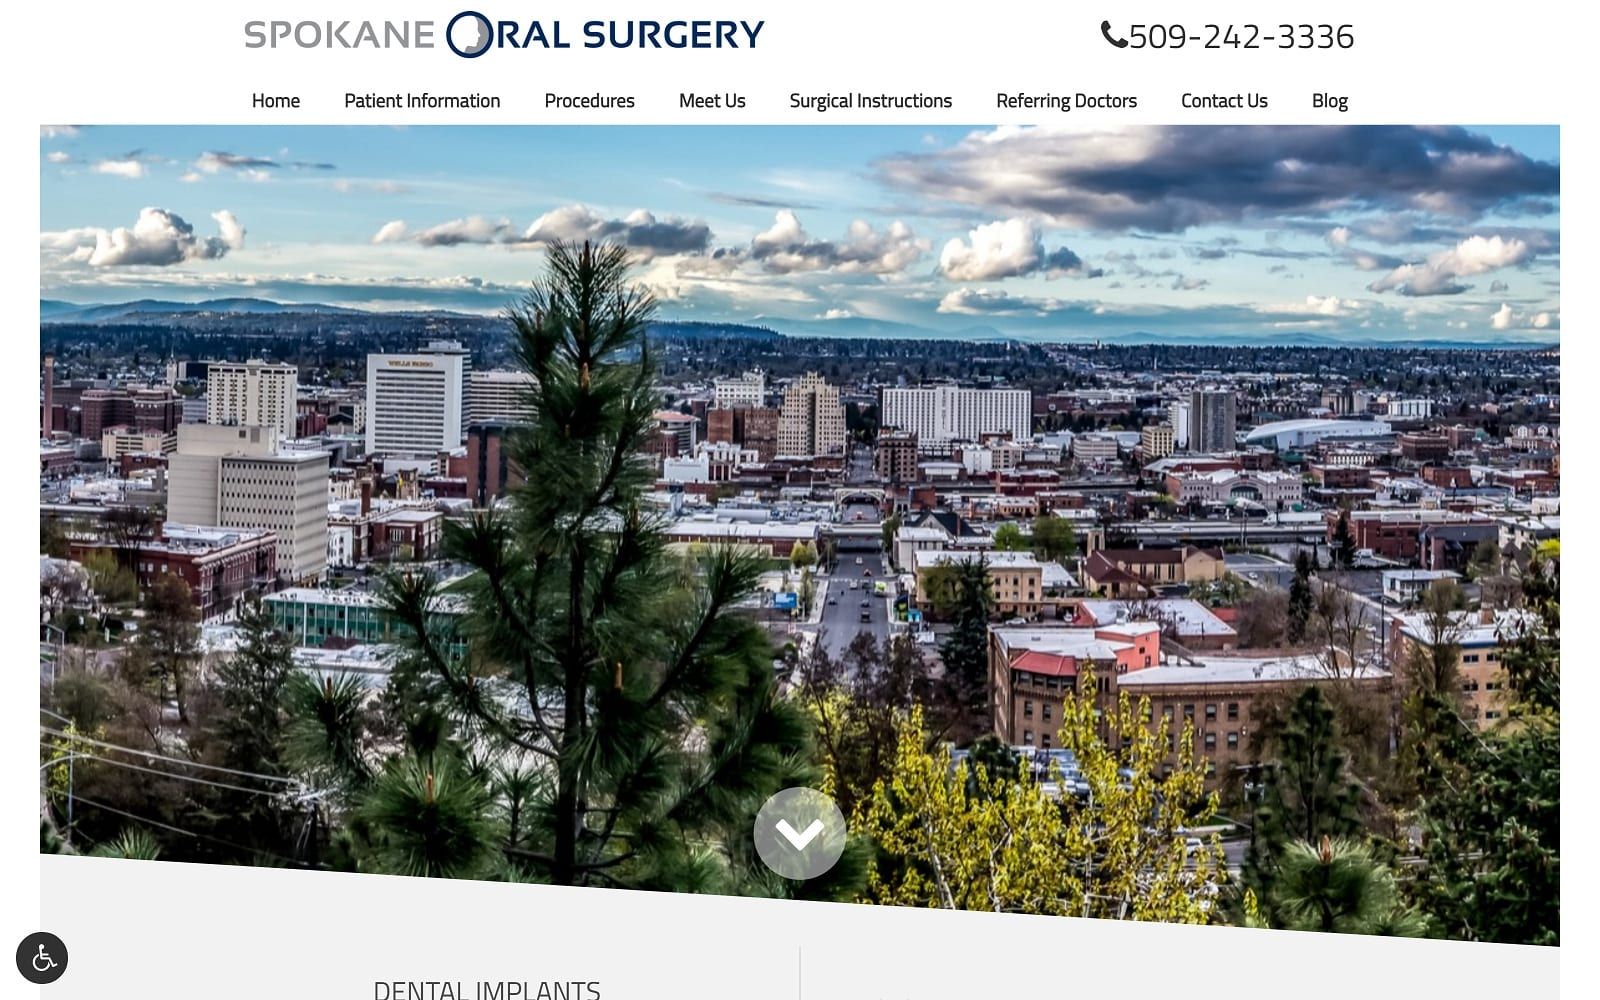 The Screenshot of Spokane Oral Surgery spokaneoralsurgery.com Website